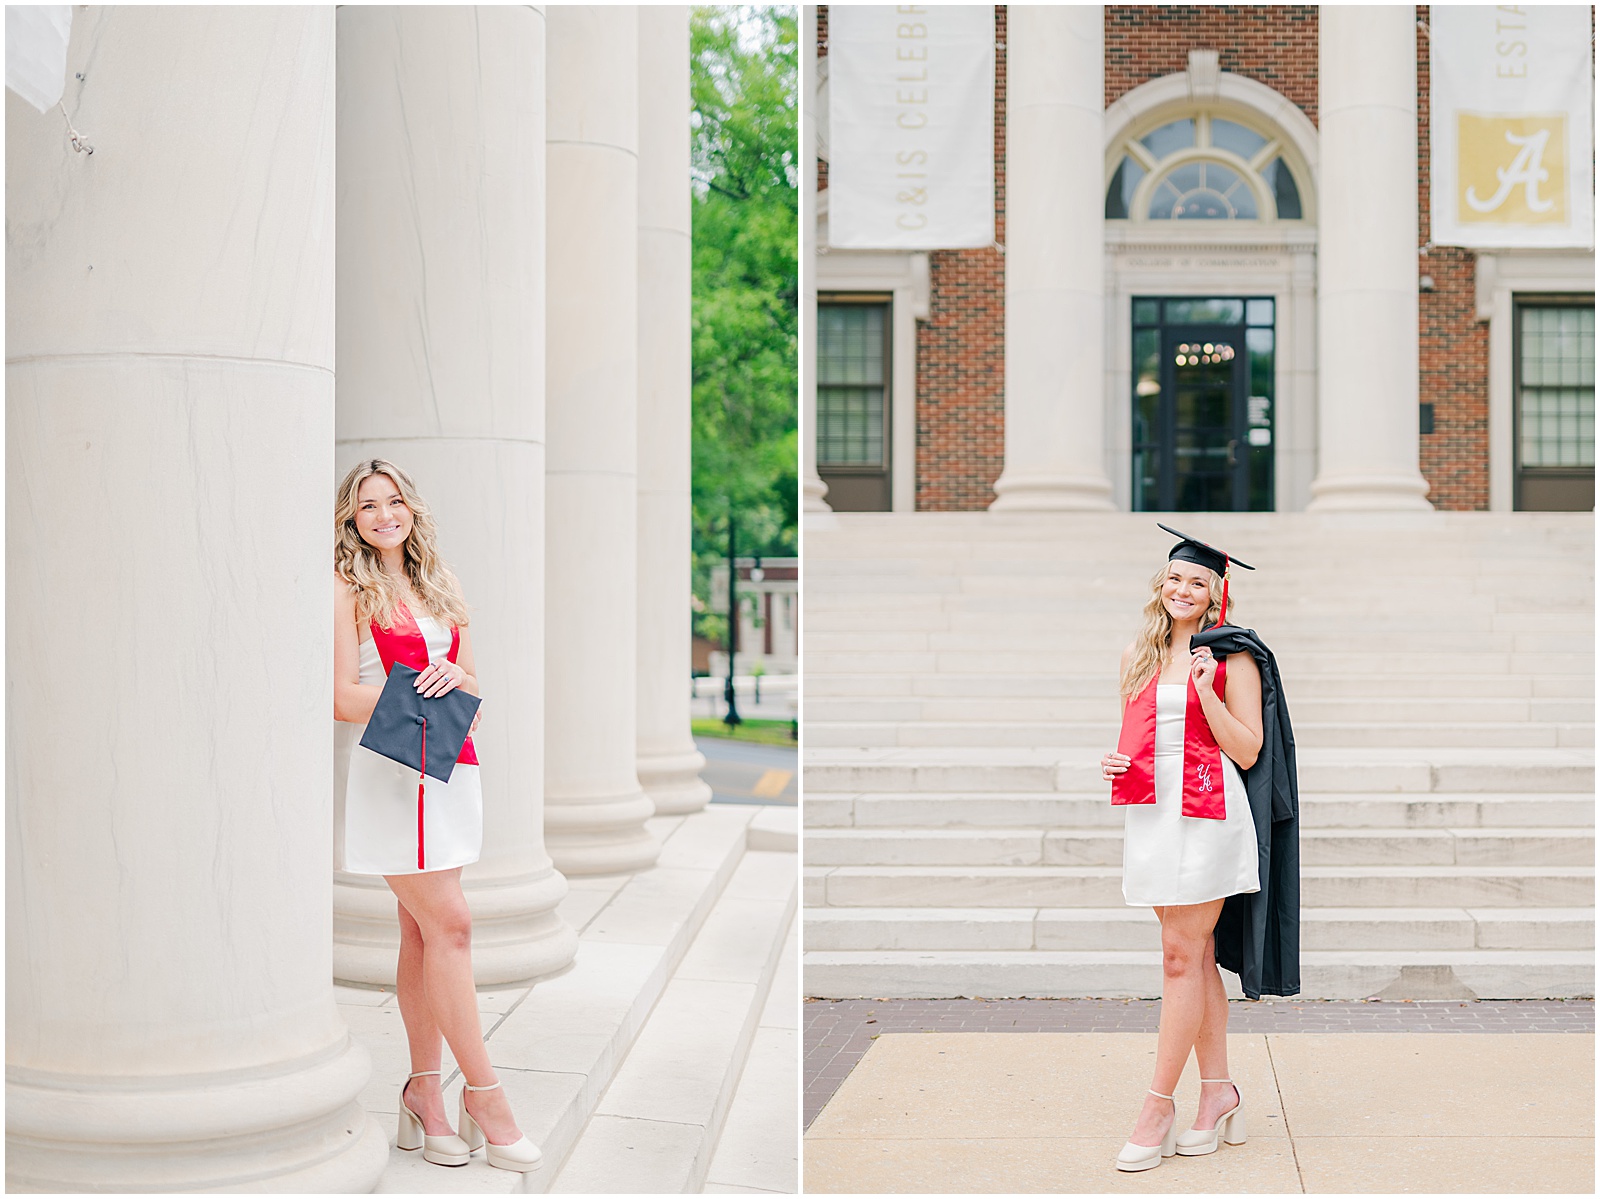 Graduation portraits at Reese-Phifer at The University of Alabama